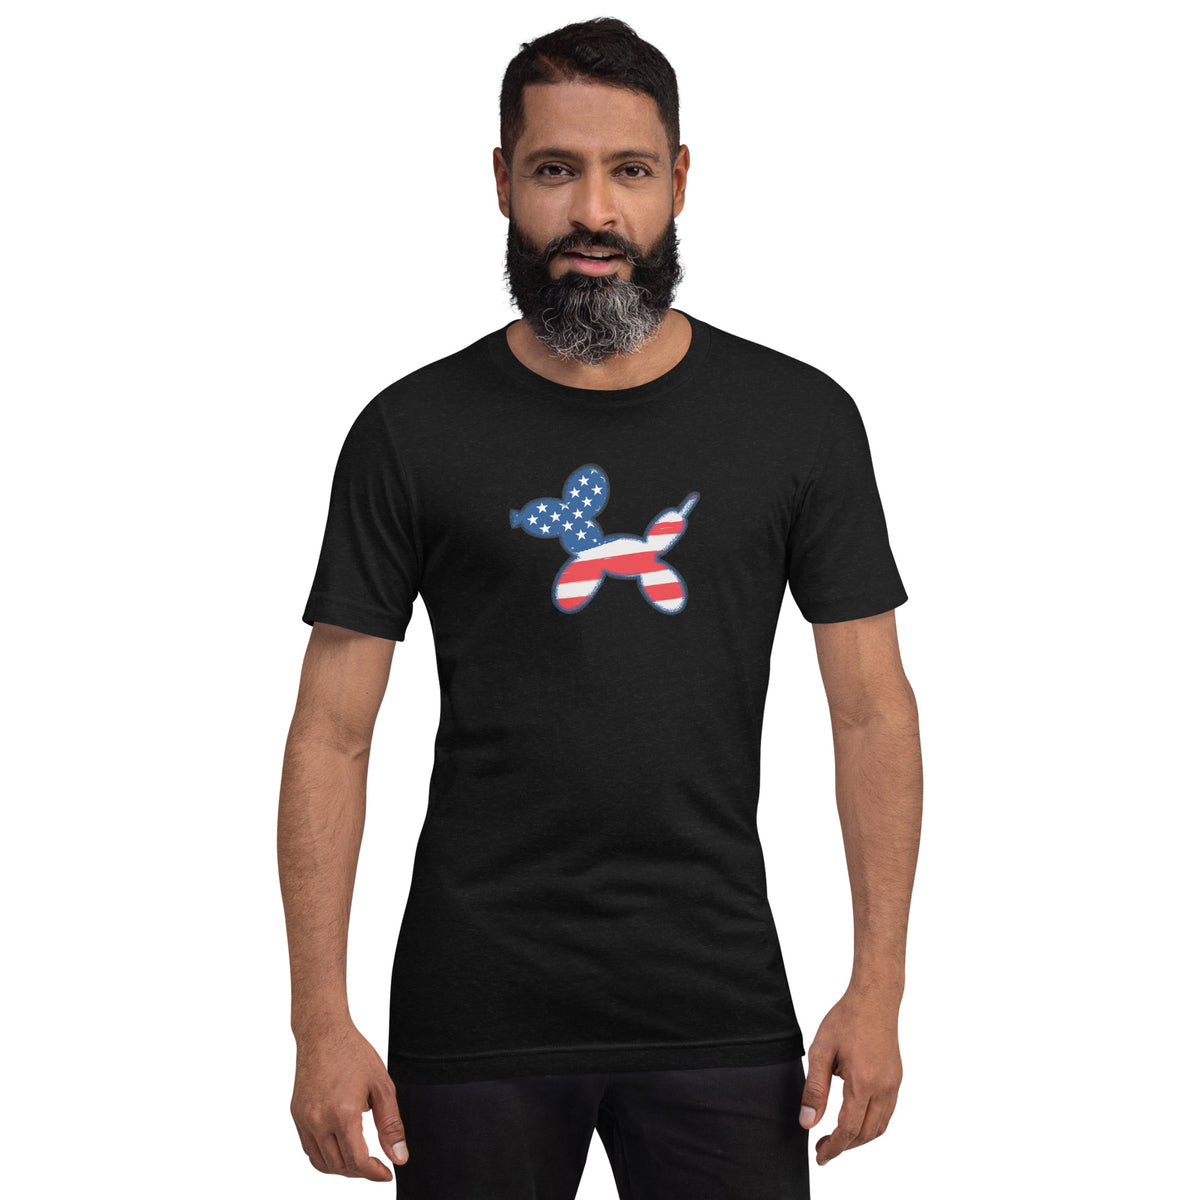 Freedom Dog Men's T-Shirt